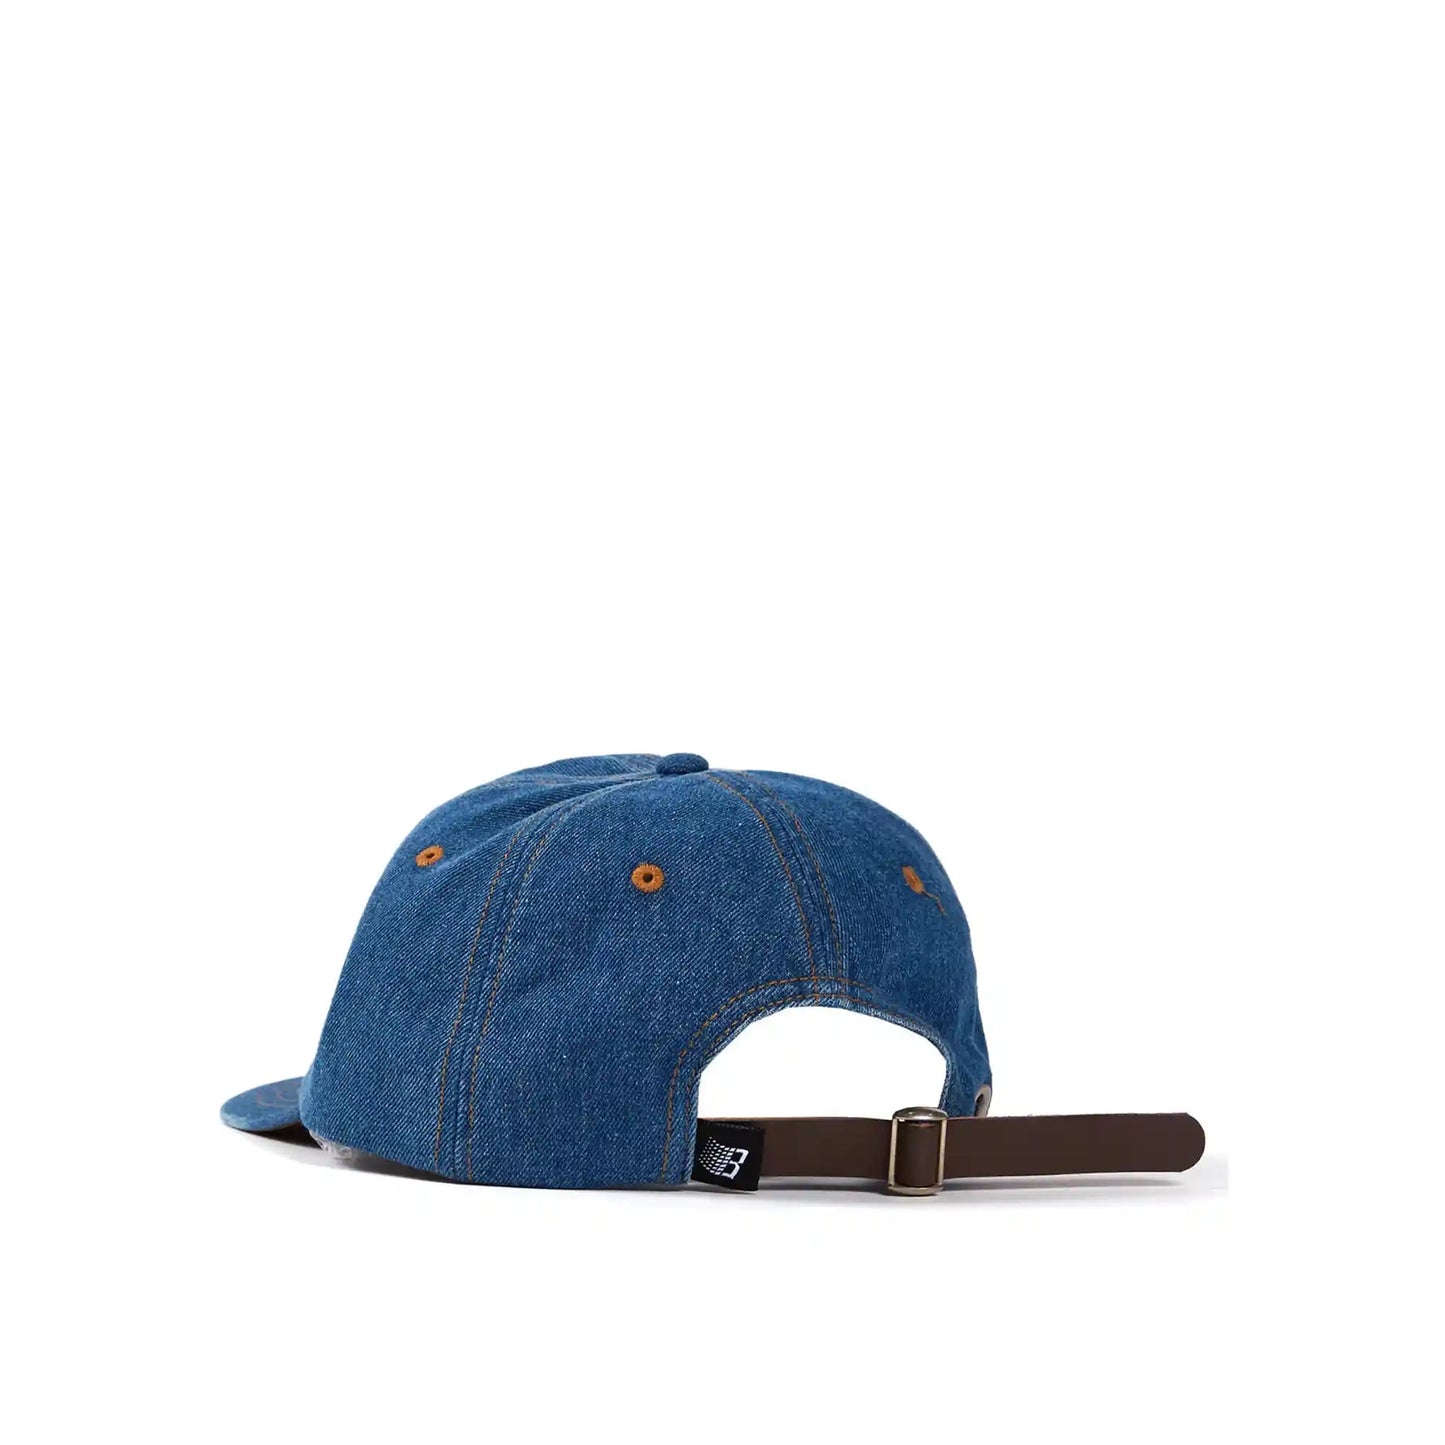 Bronze XLB Denim Hat, blue - Tiki Room Skateboards - 2